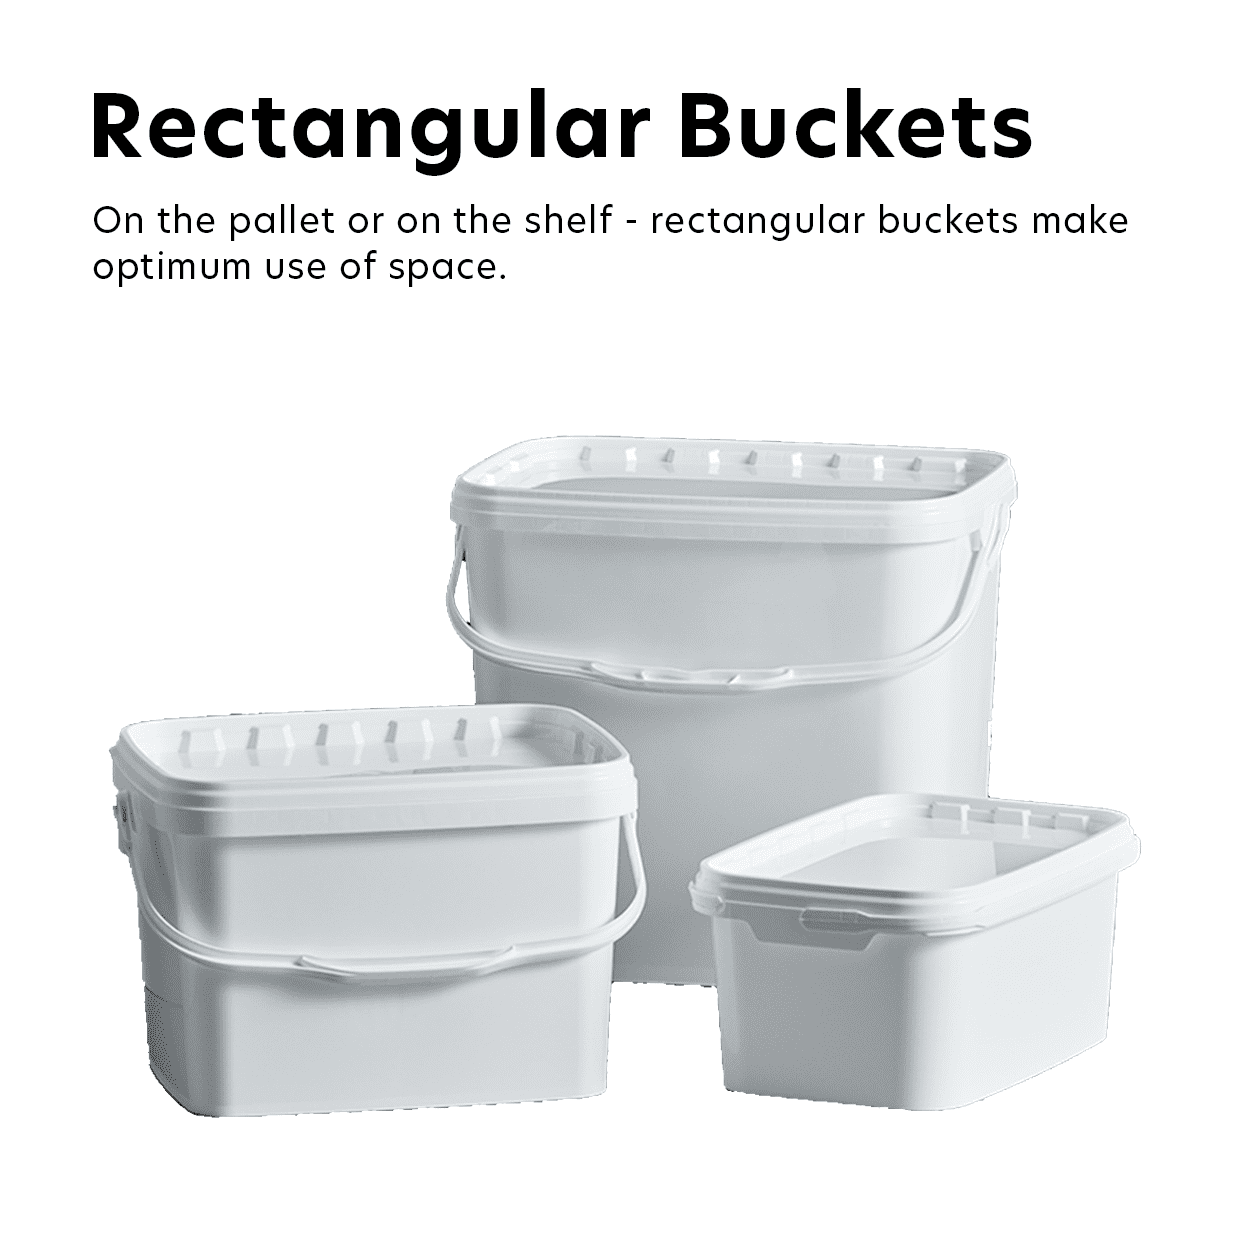 Rectangular Buckets